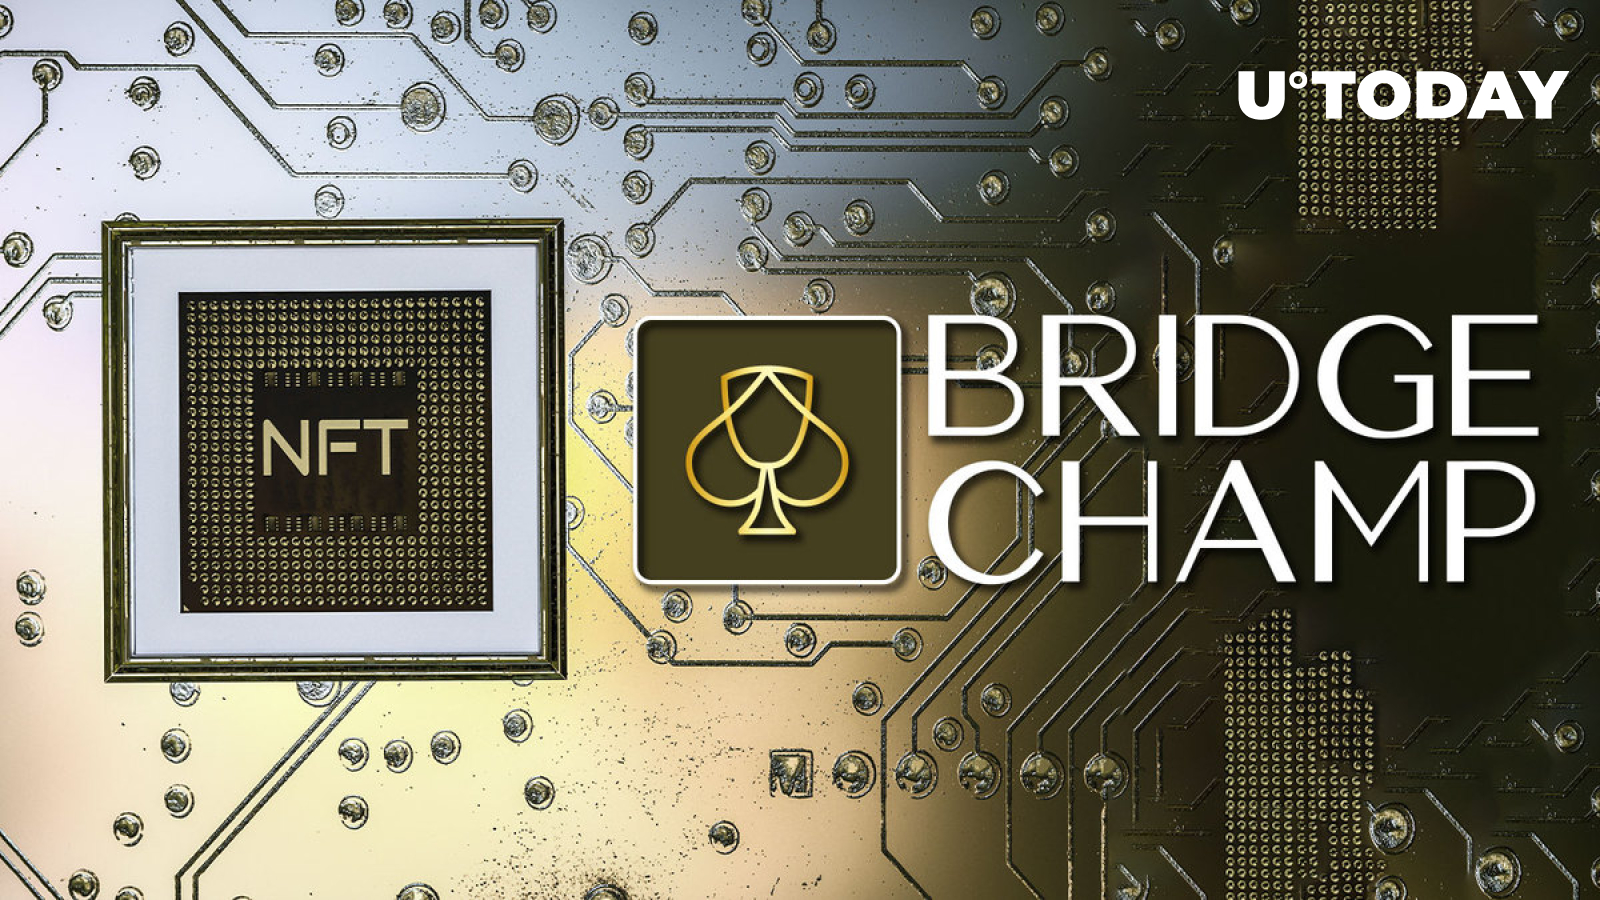 Bridge Champ Introduces NFT Badges and Crypto Rewards, New Roadmap Says